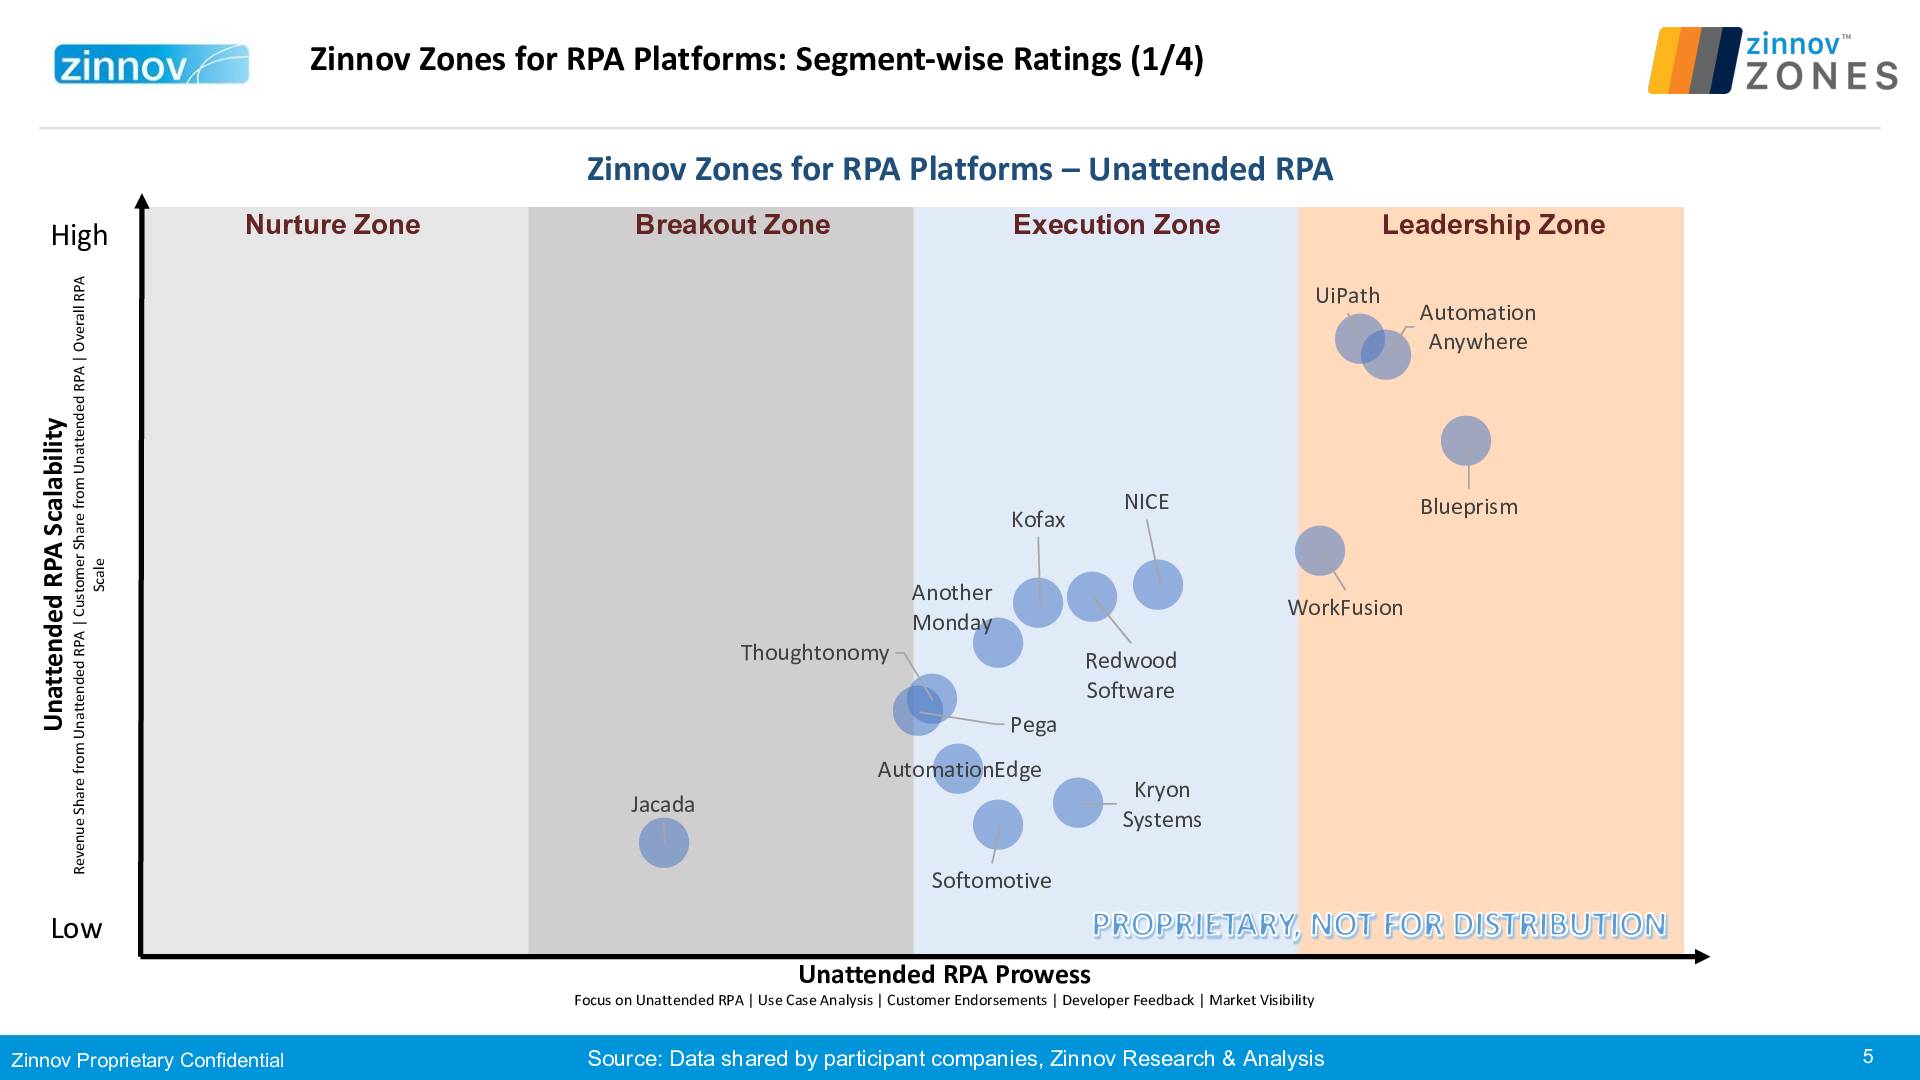 Zinnov Zones Rpa Platforms 2019 Ratings Revised V55